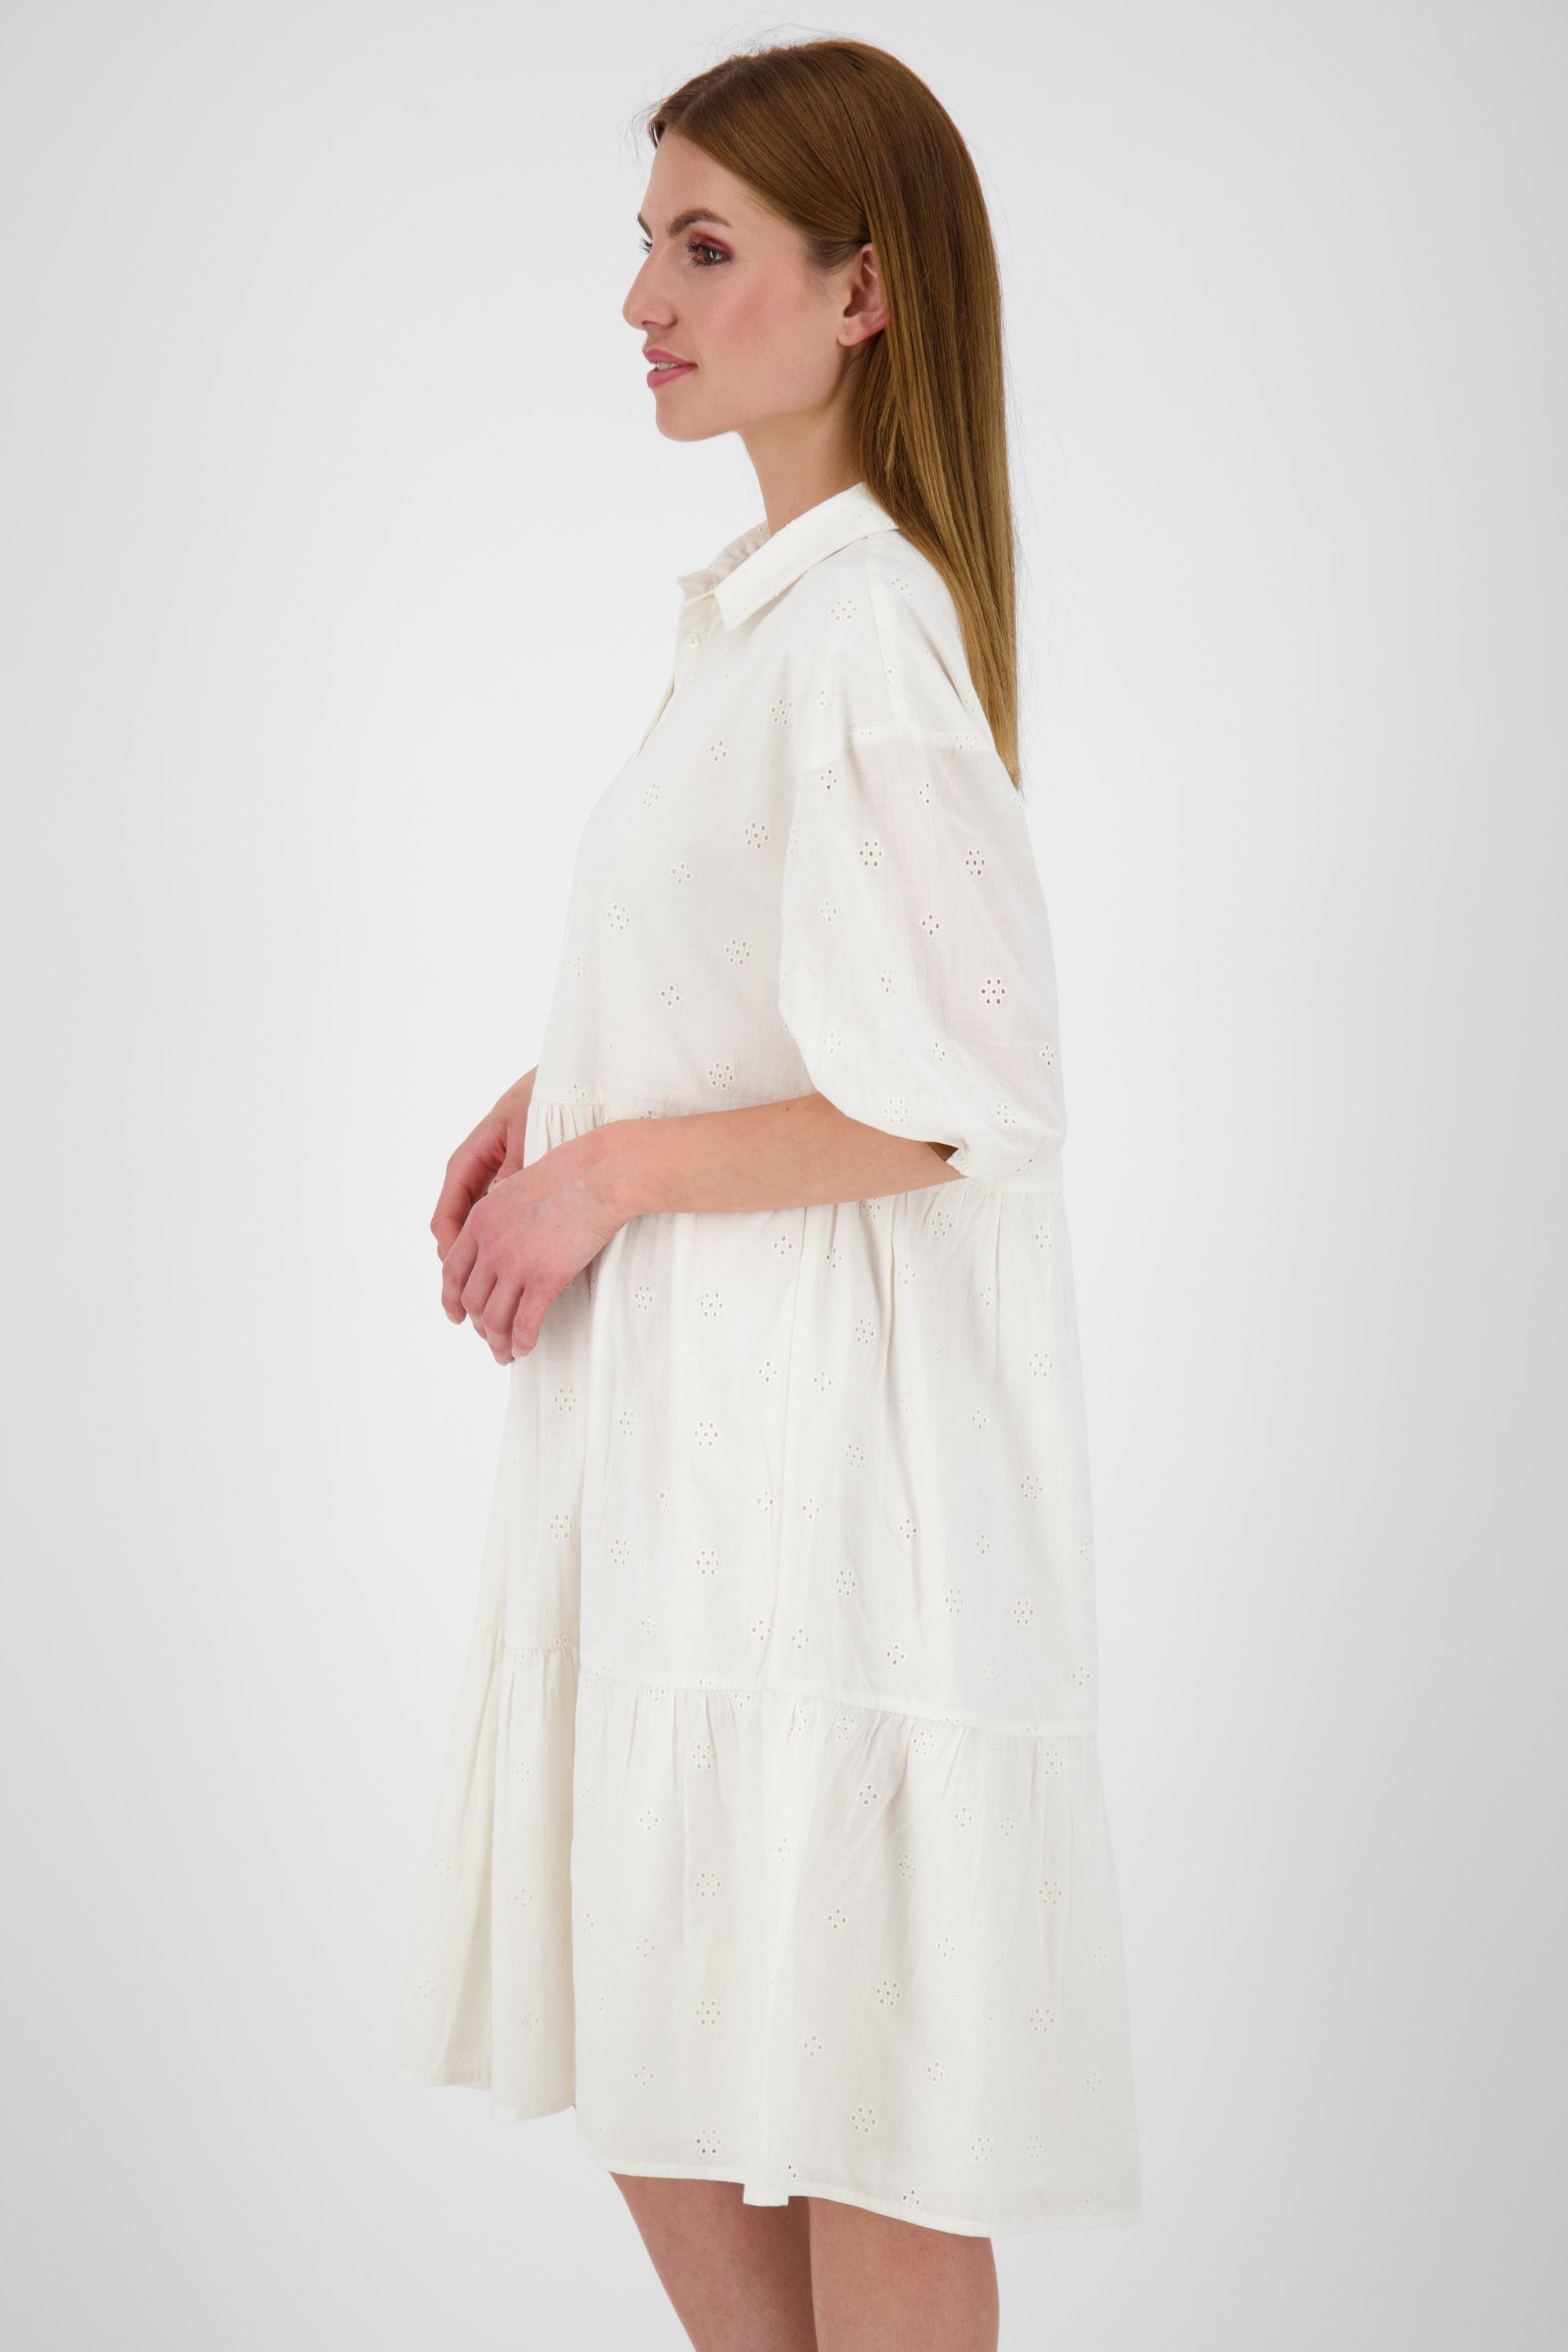 Alife white Kleid Damen & SalomeAK Sommerkleid, Kickin Jerseykleid E Dress